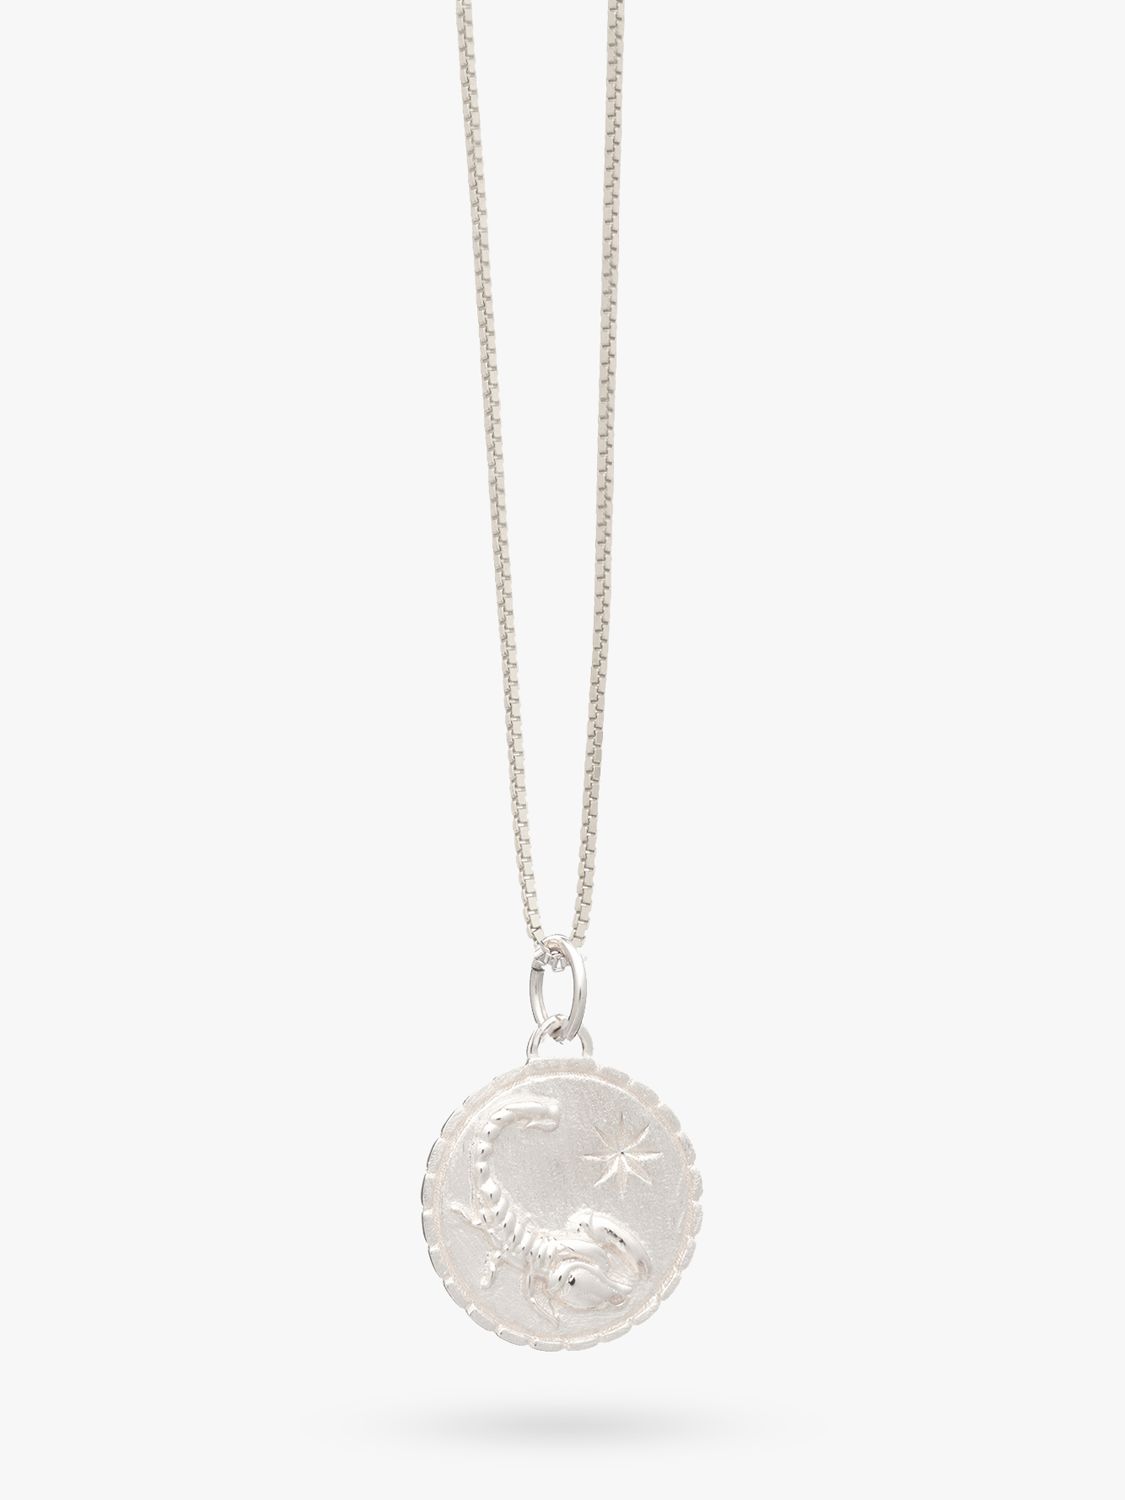 Rachel Jackson London Personalised Zodiac Art Coin Necklace, Silver, Scorpio